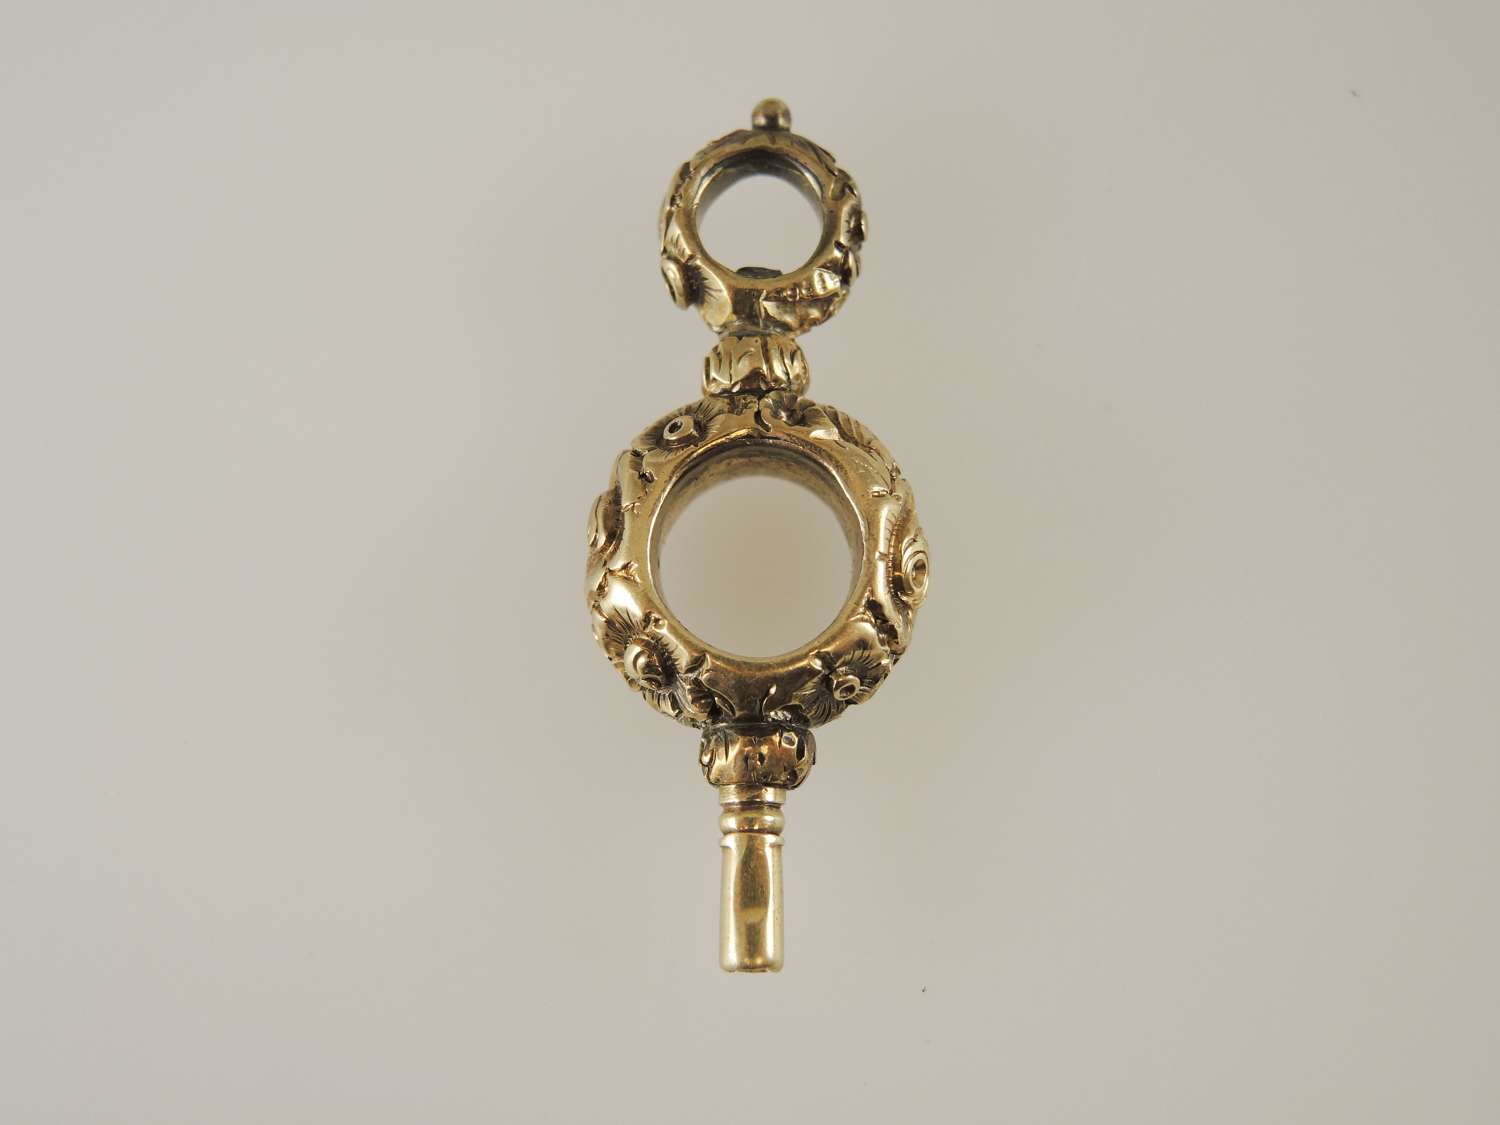 15K gold antique pocket watch key. C1850